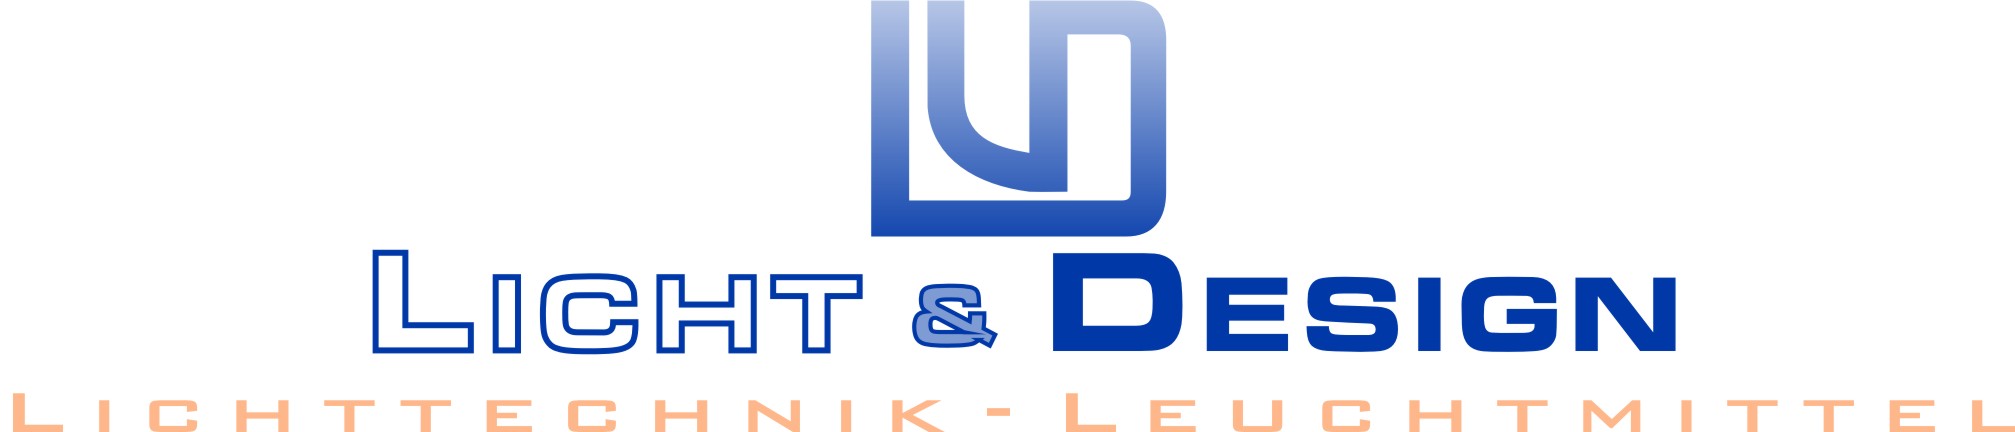 lud logo 2017 4